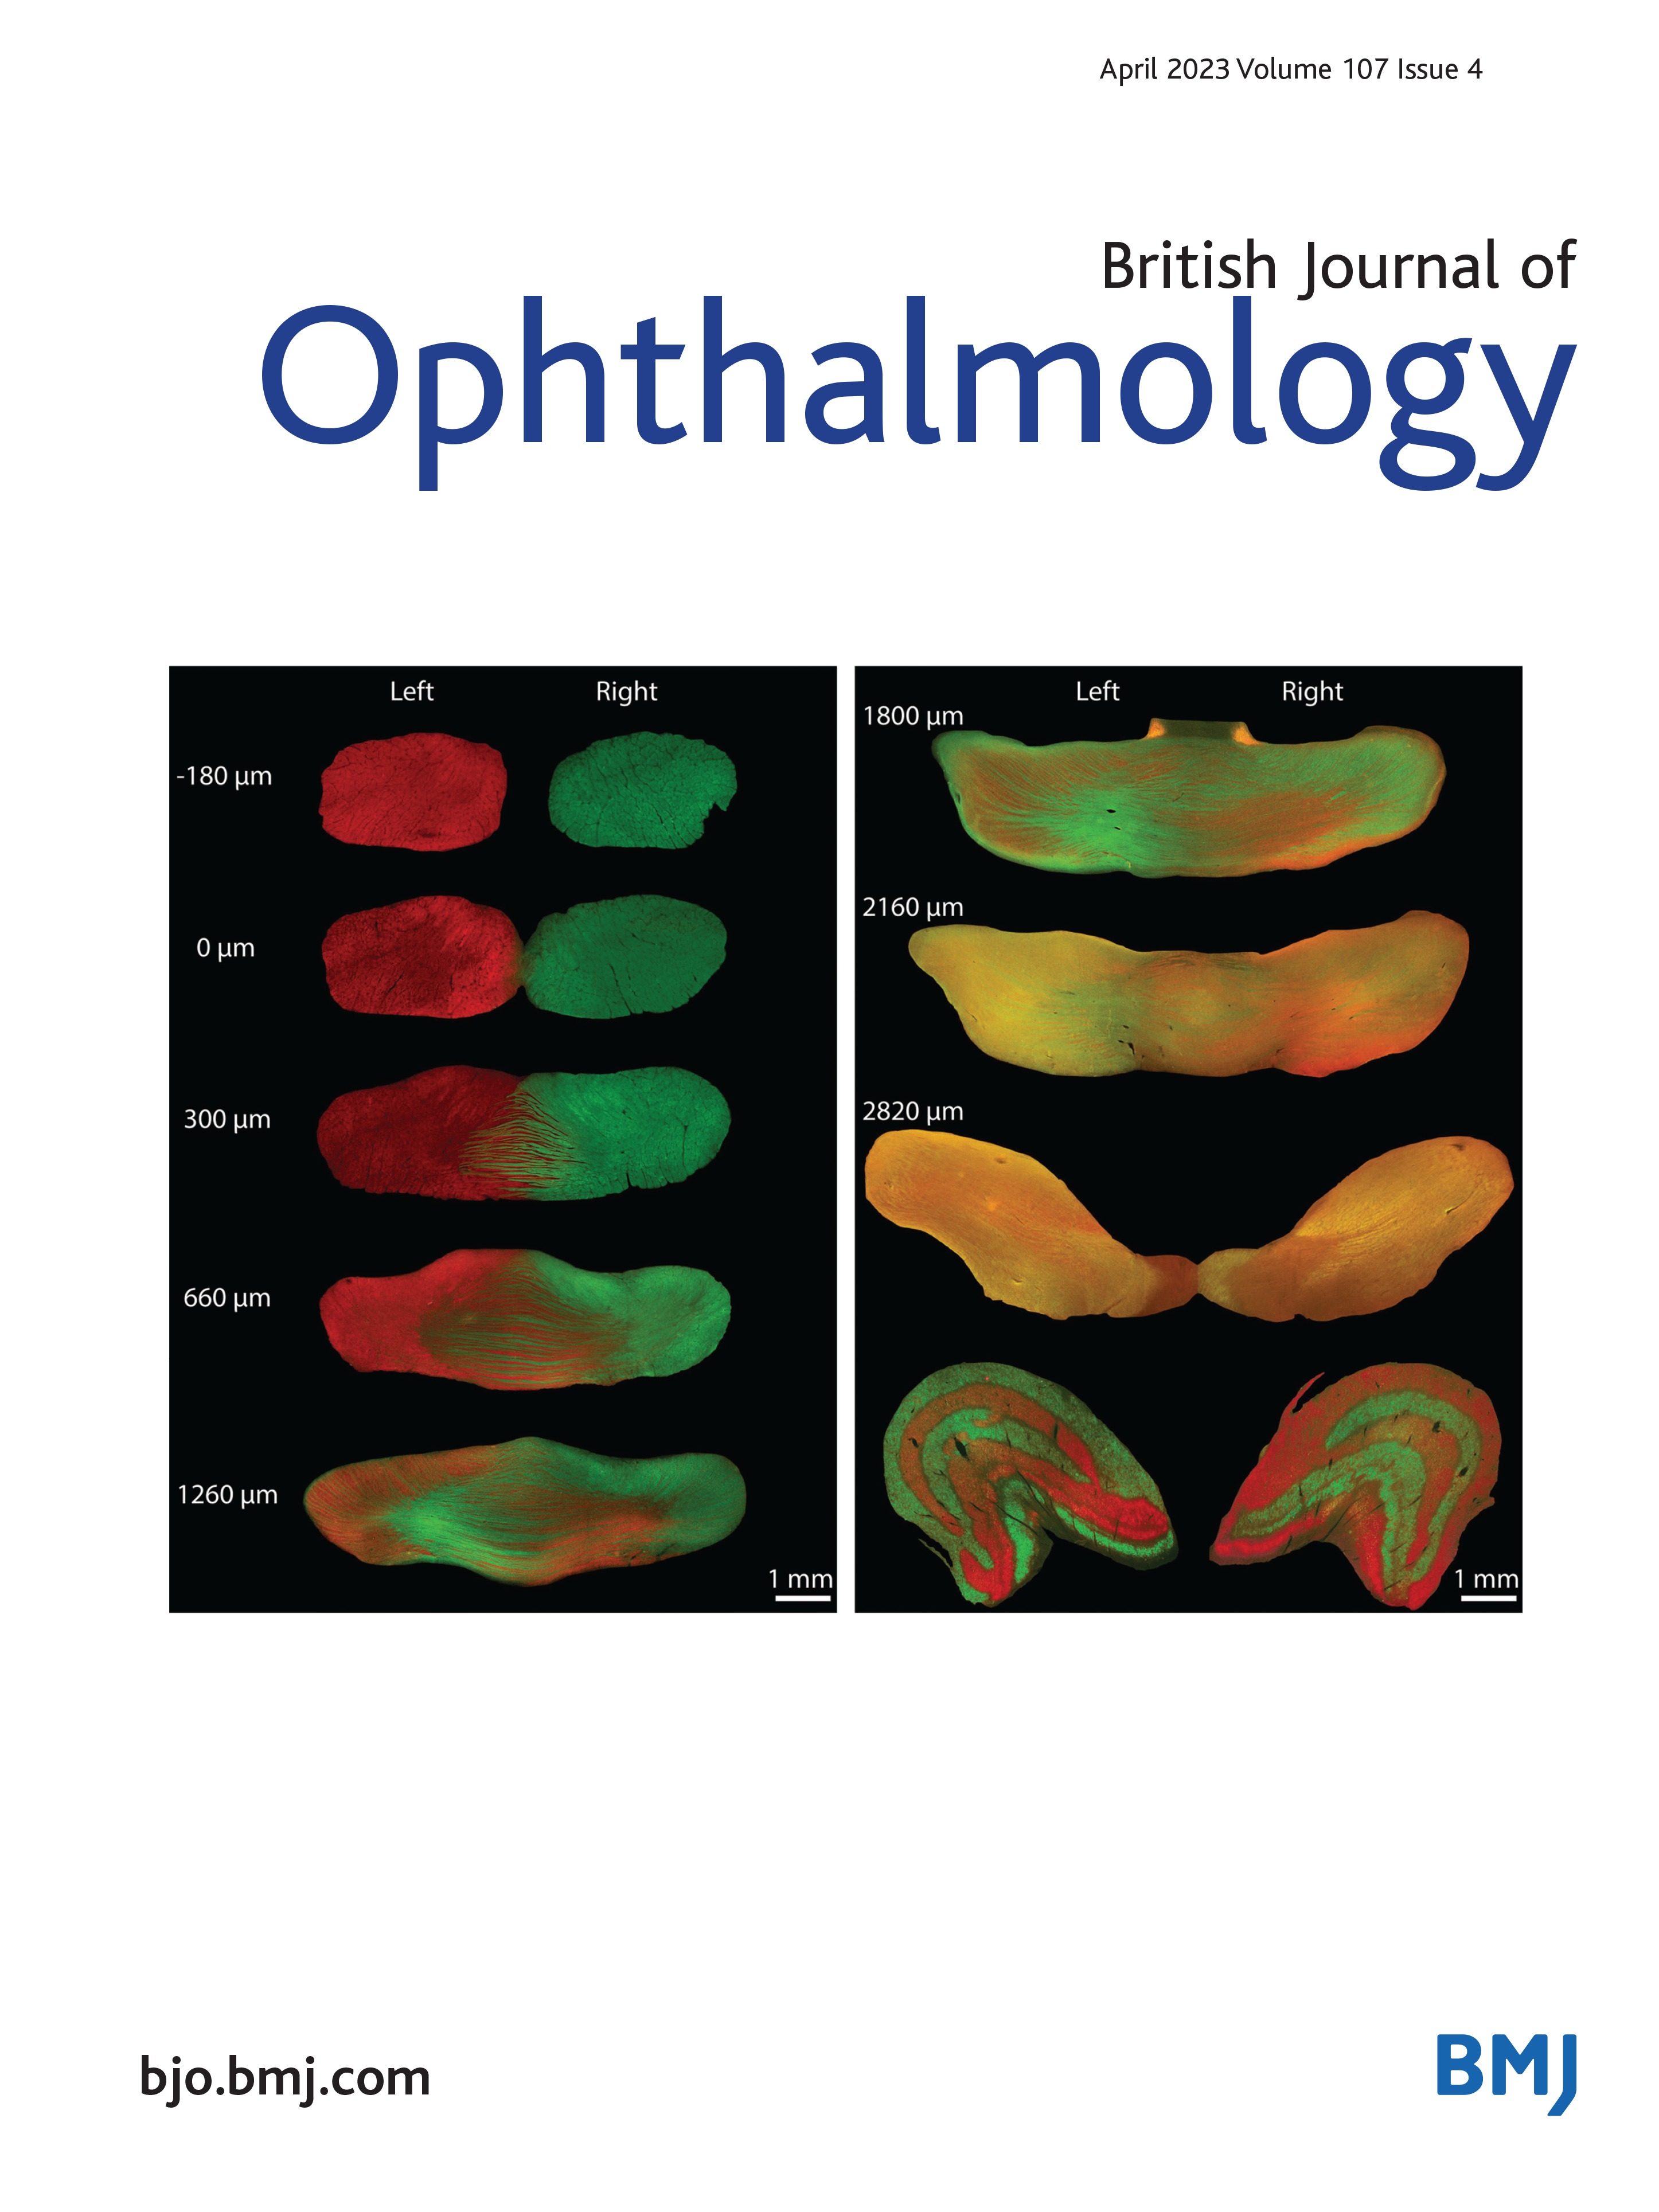 Inner retinal degeneration associated with optic nerve head drusen in pseudoxanthoma elasticum